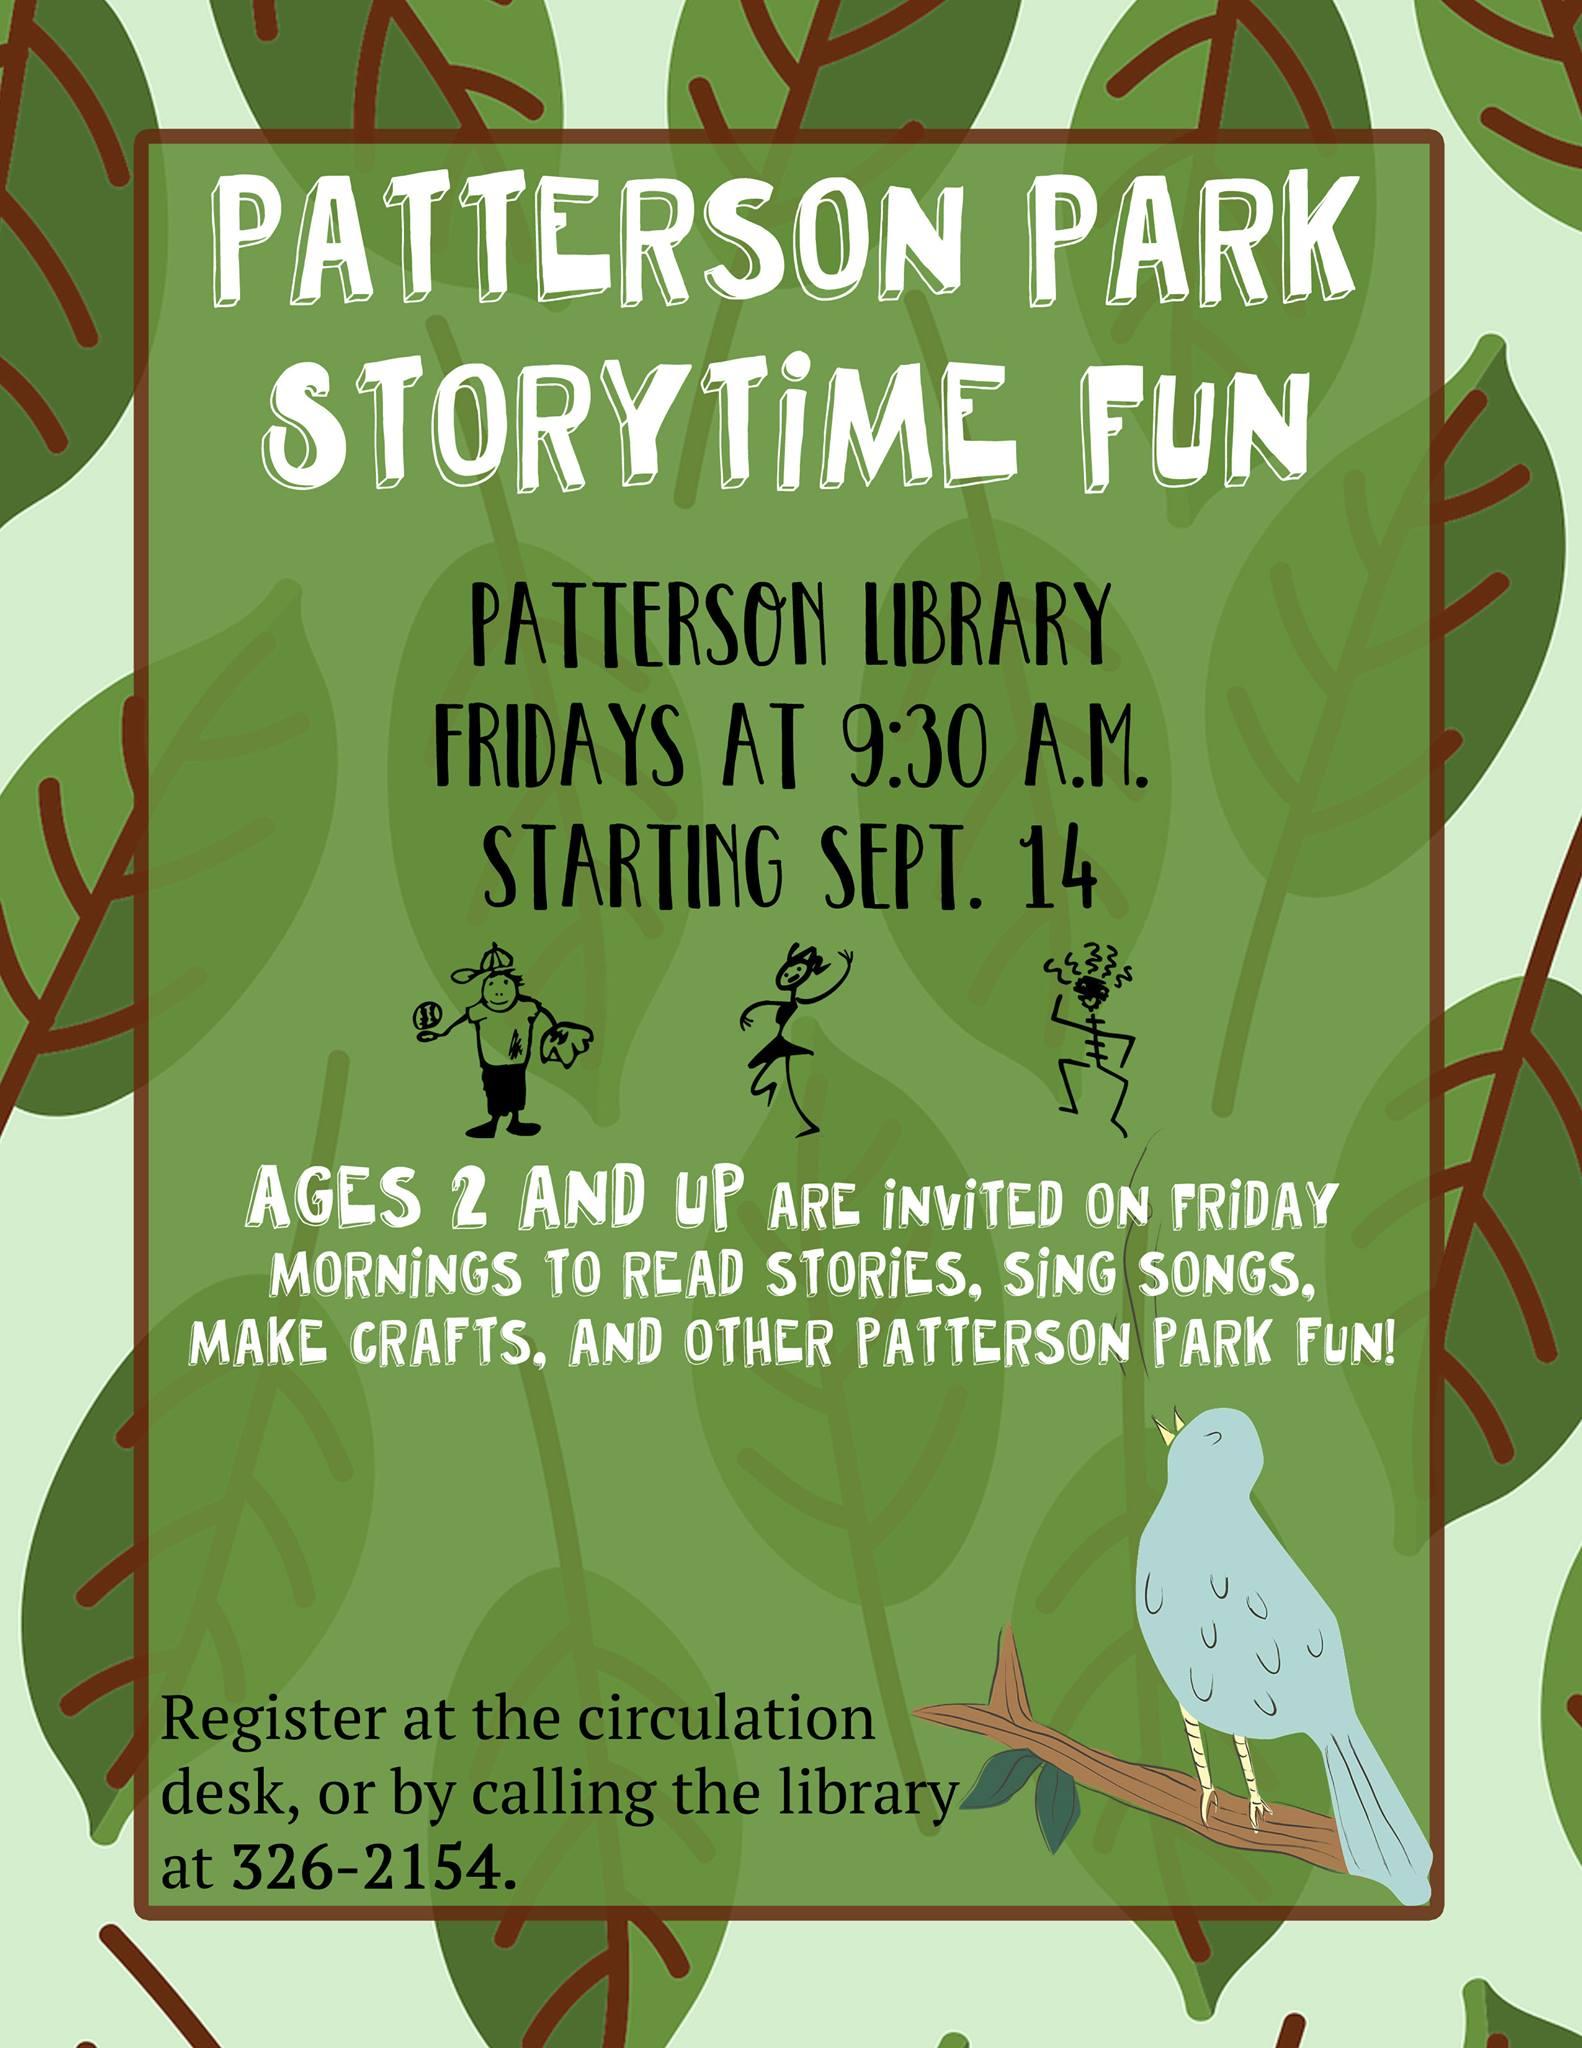 Patterson Park Storytime Fun